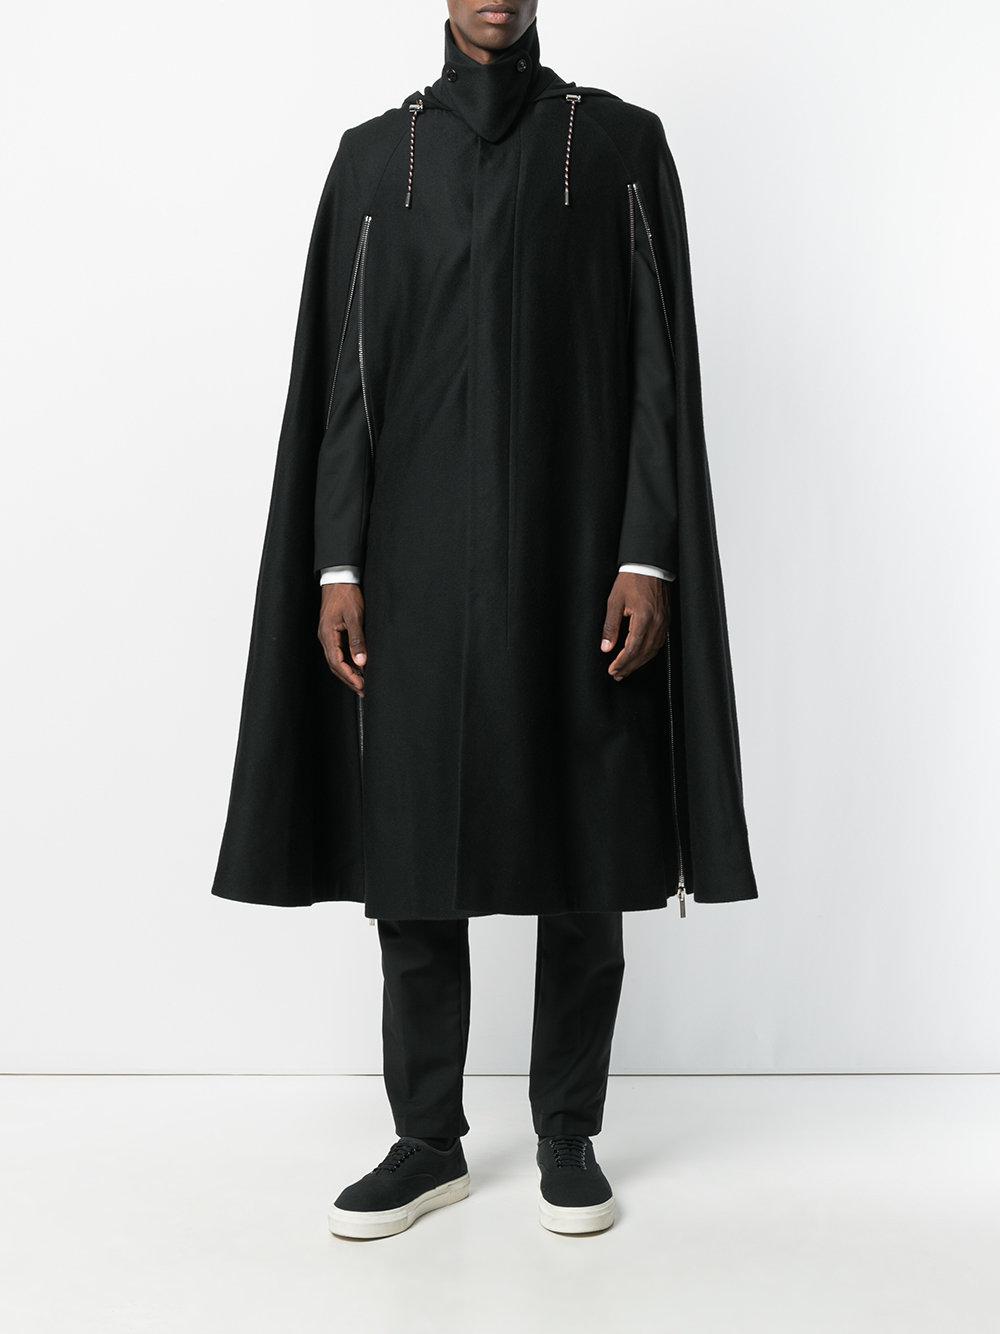 Dior Homme Oversized Cape Coat in Black for Men | Lyst